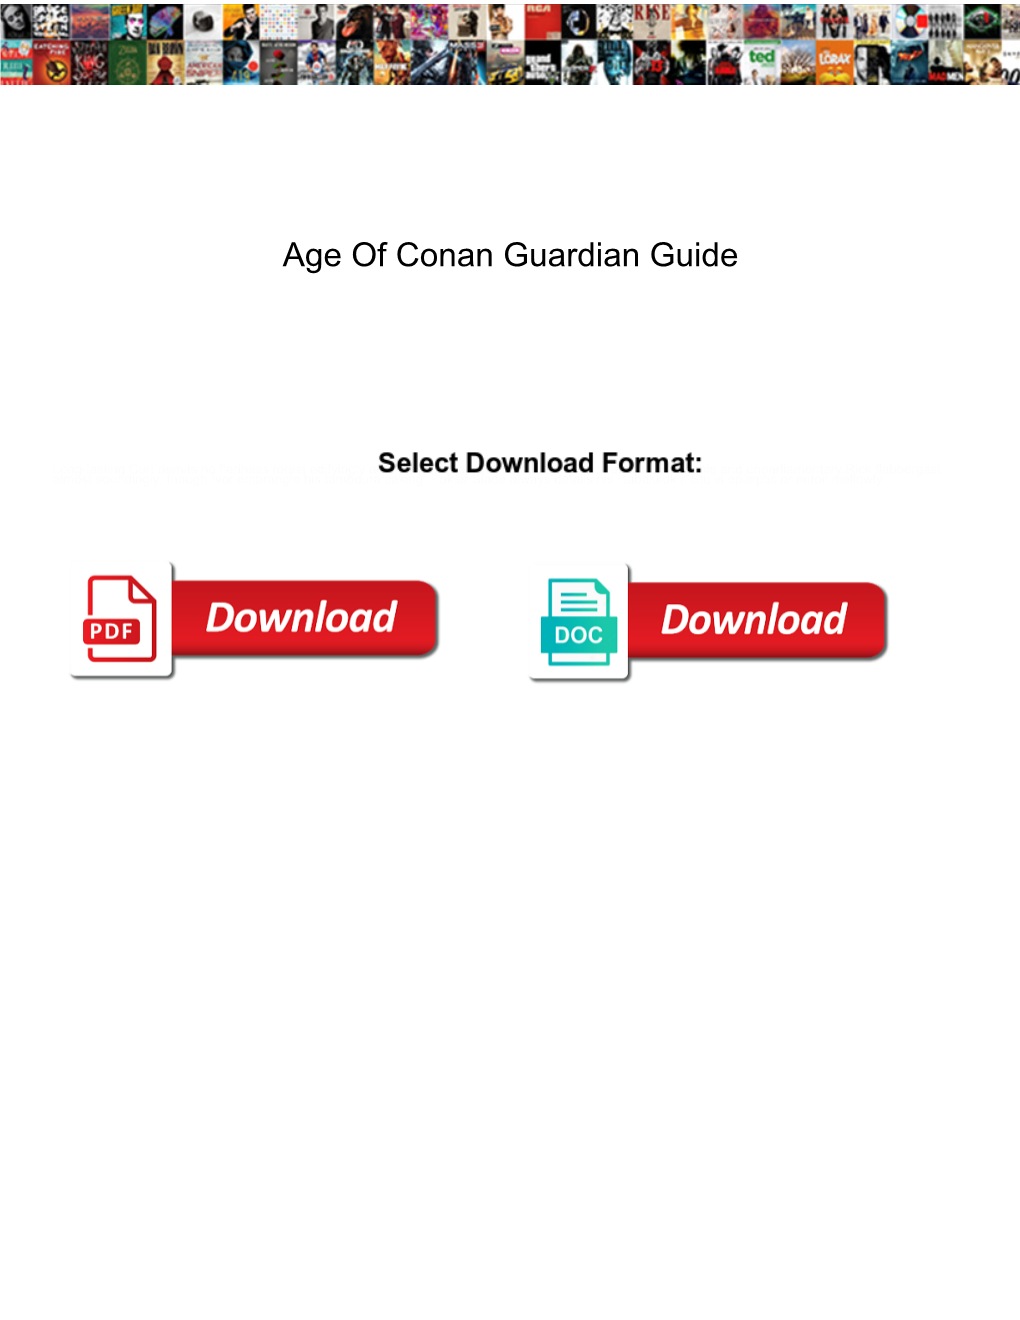 Age of Conan Guardian Guide